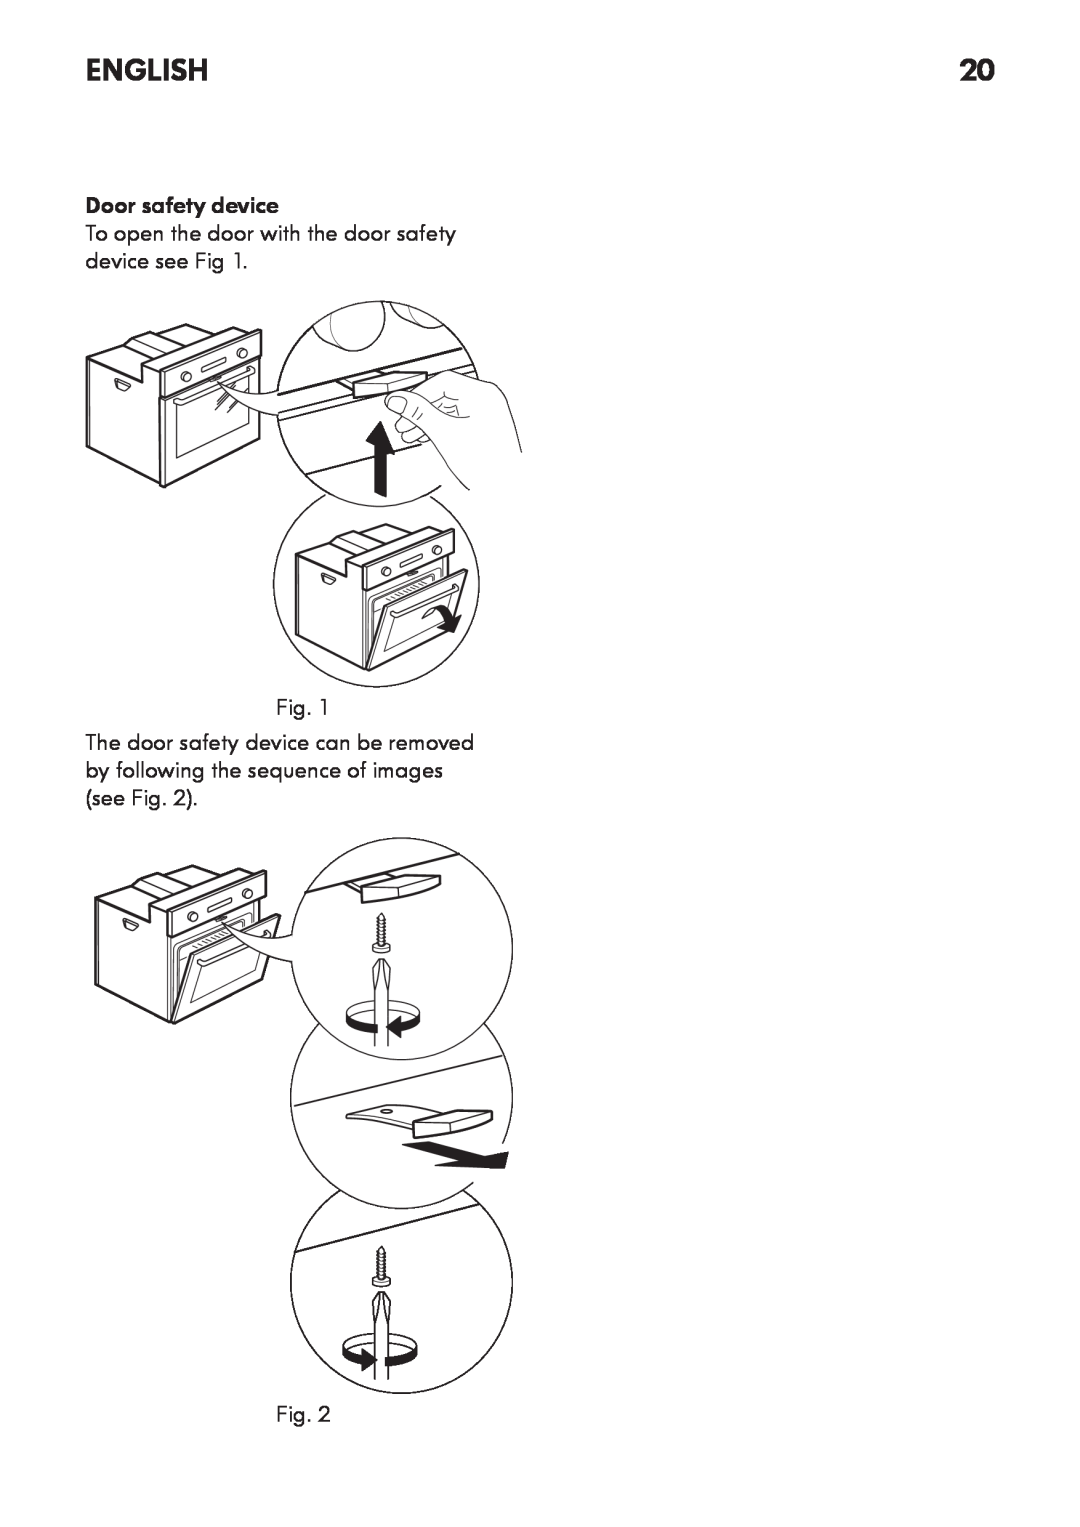 IKEA OV8 manual English, Door safety device, Fig 